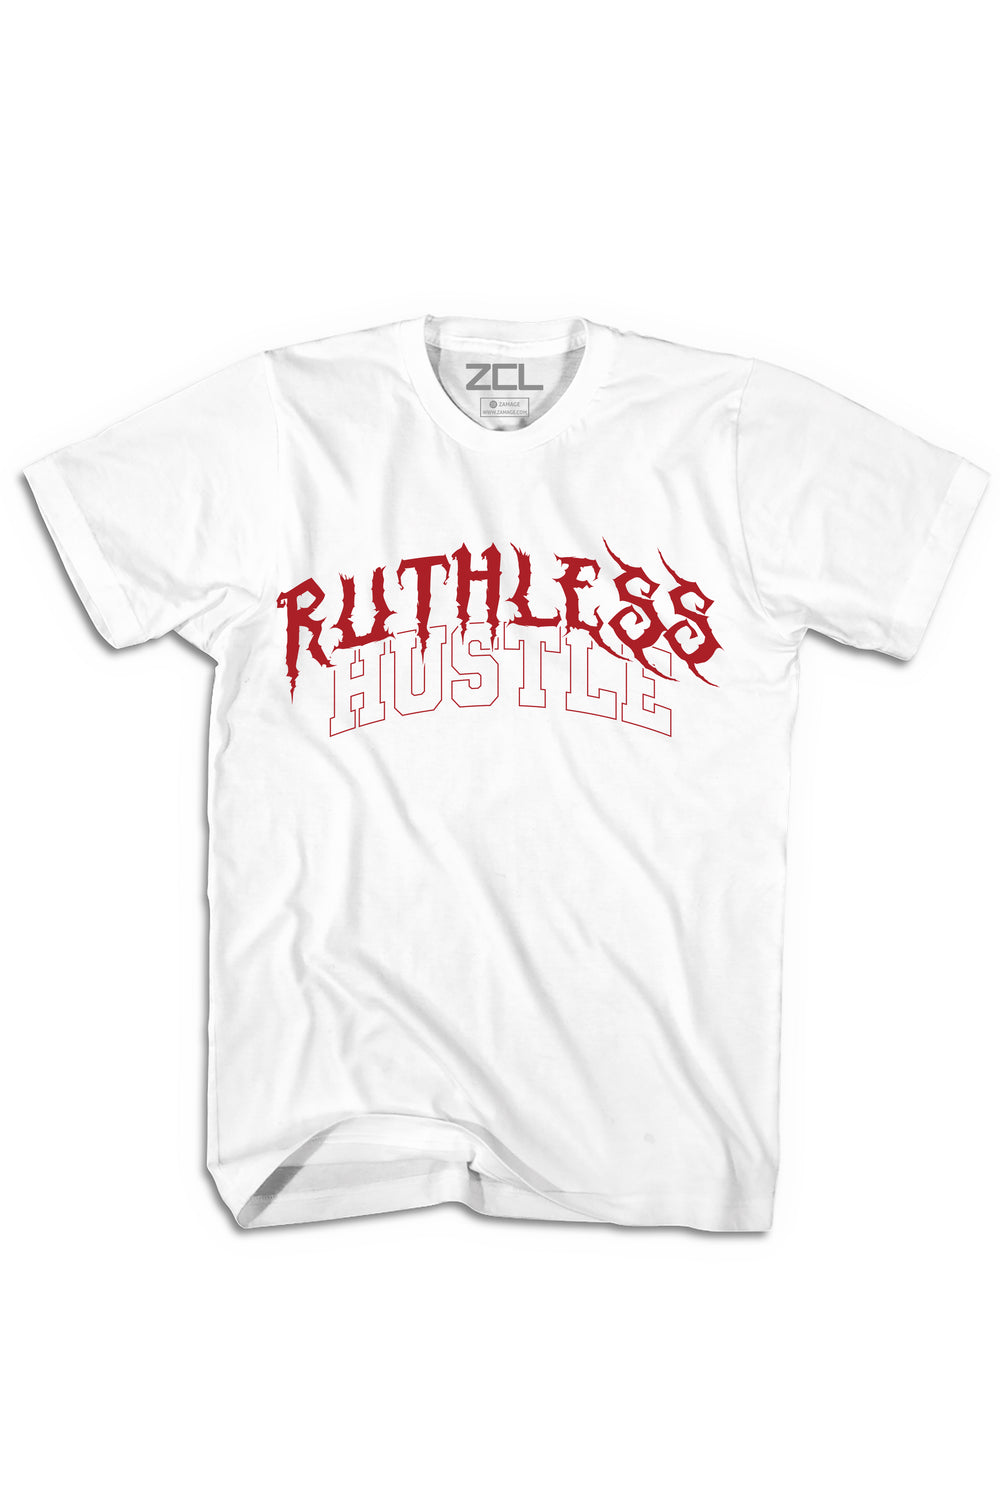 Ruthless Hustle Tee (Red Logo) - Zamage